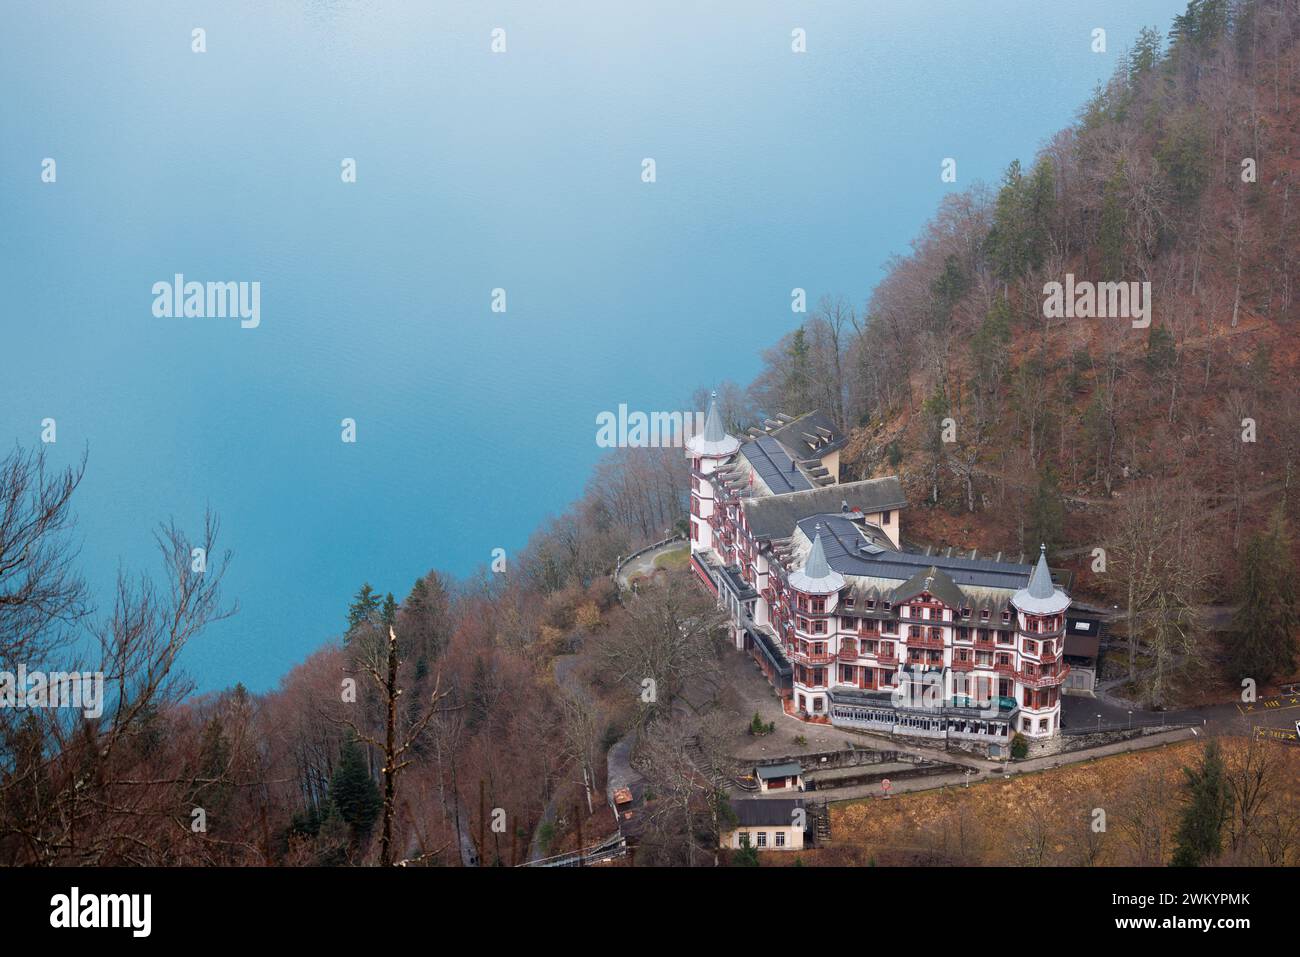 Grandhotel Giessbach in inverno senza neve Foto Stock